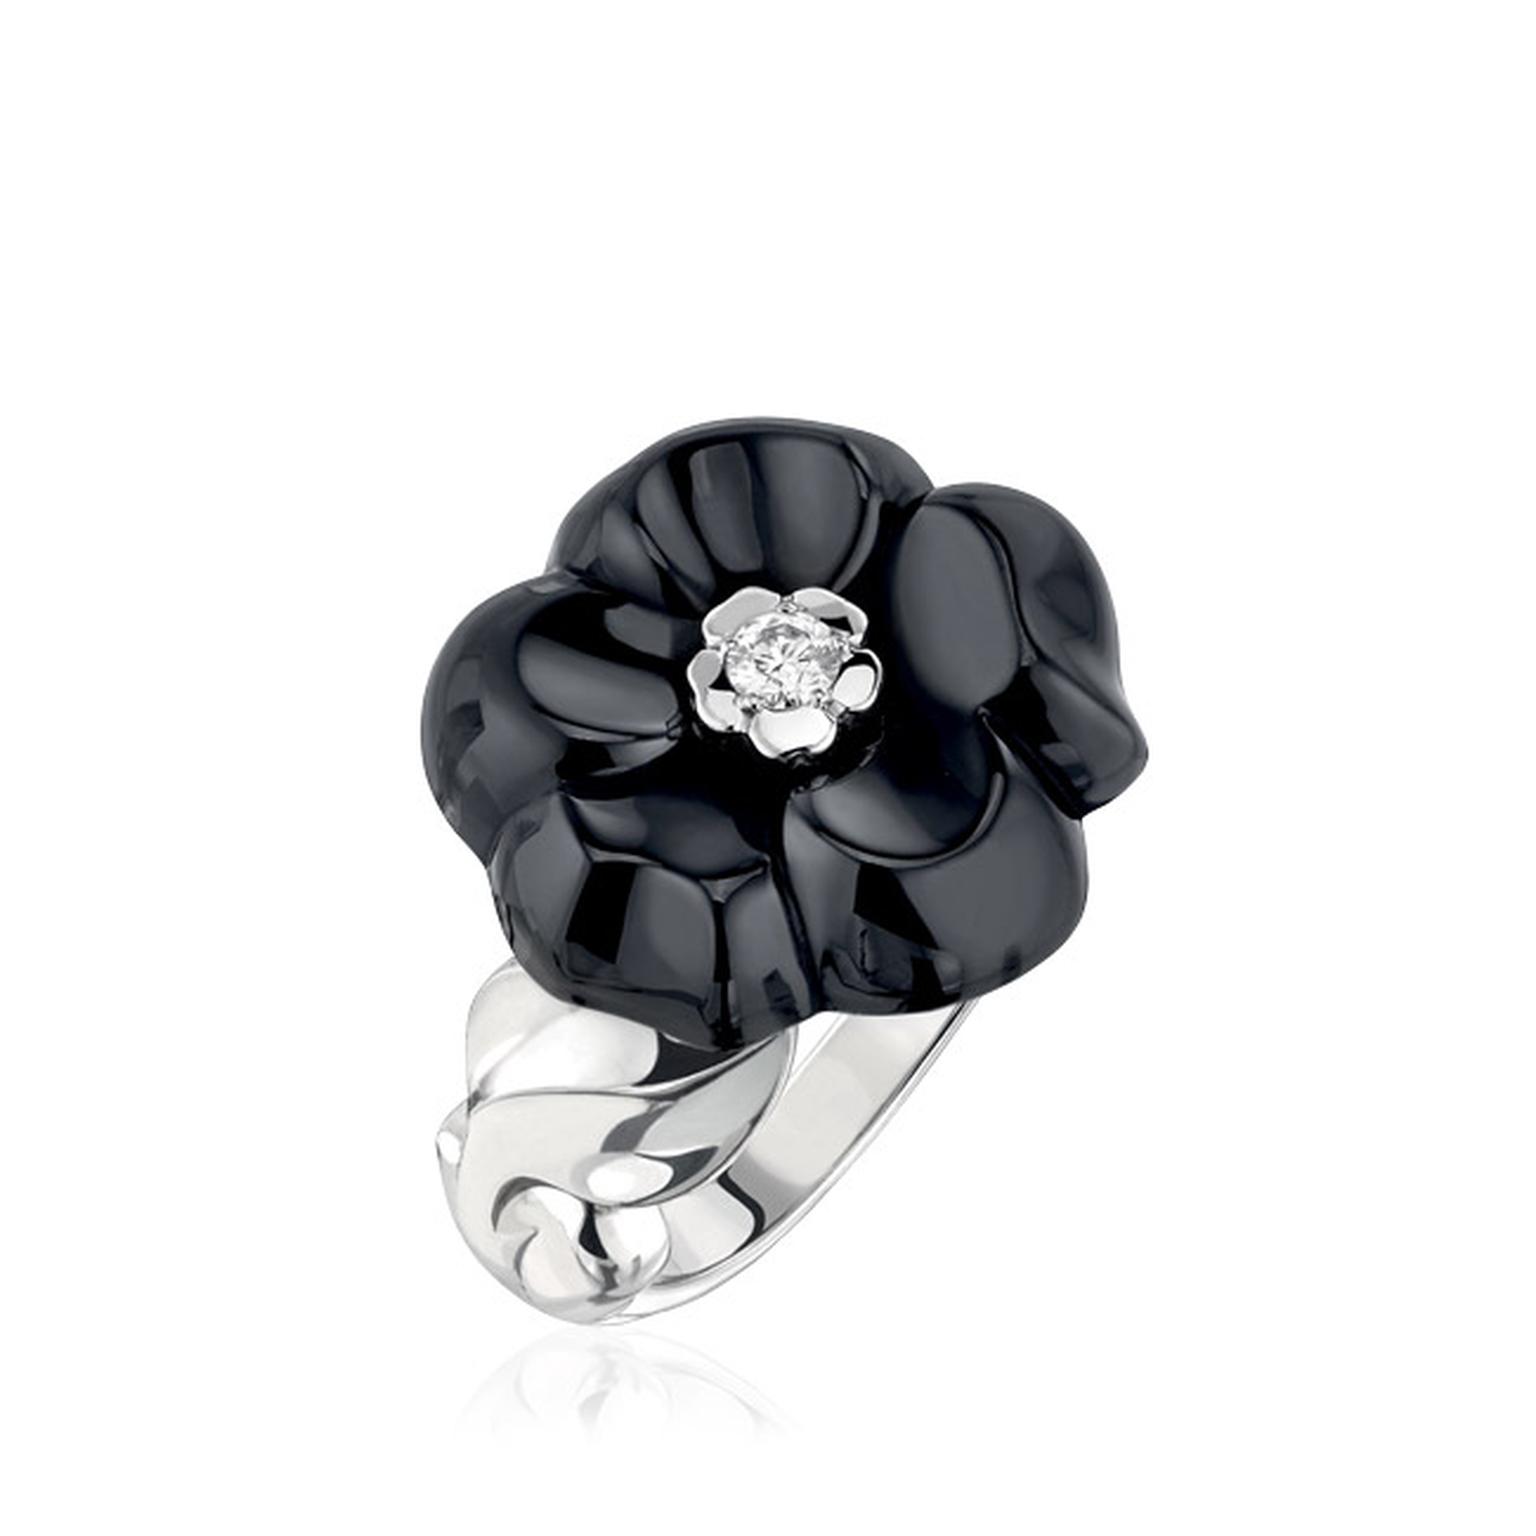 Chanel-Camelia-Galbe-ring-black-ceramic-main